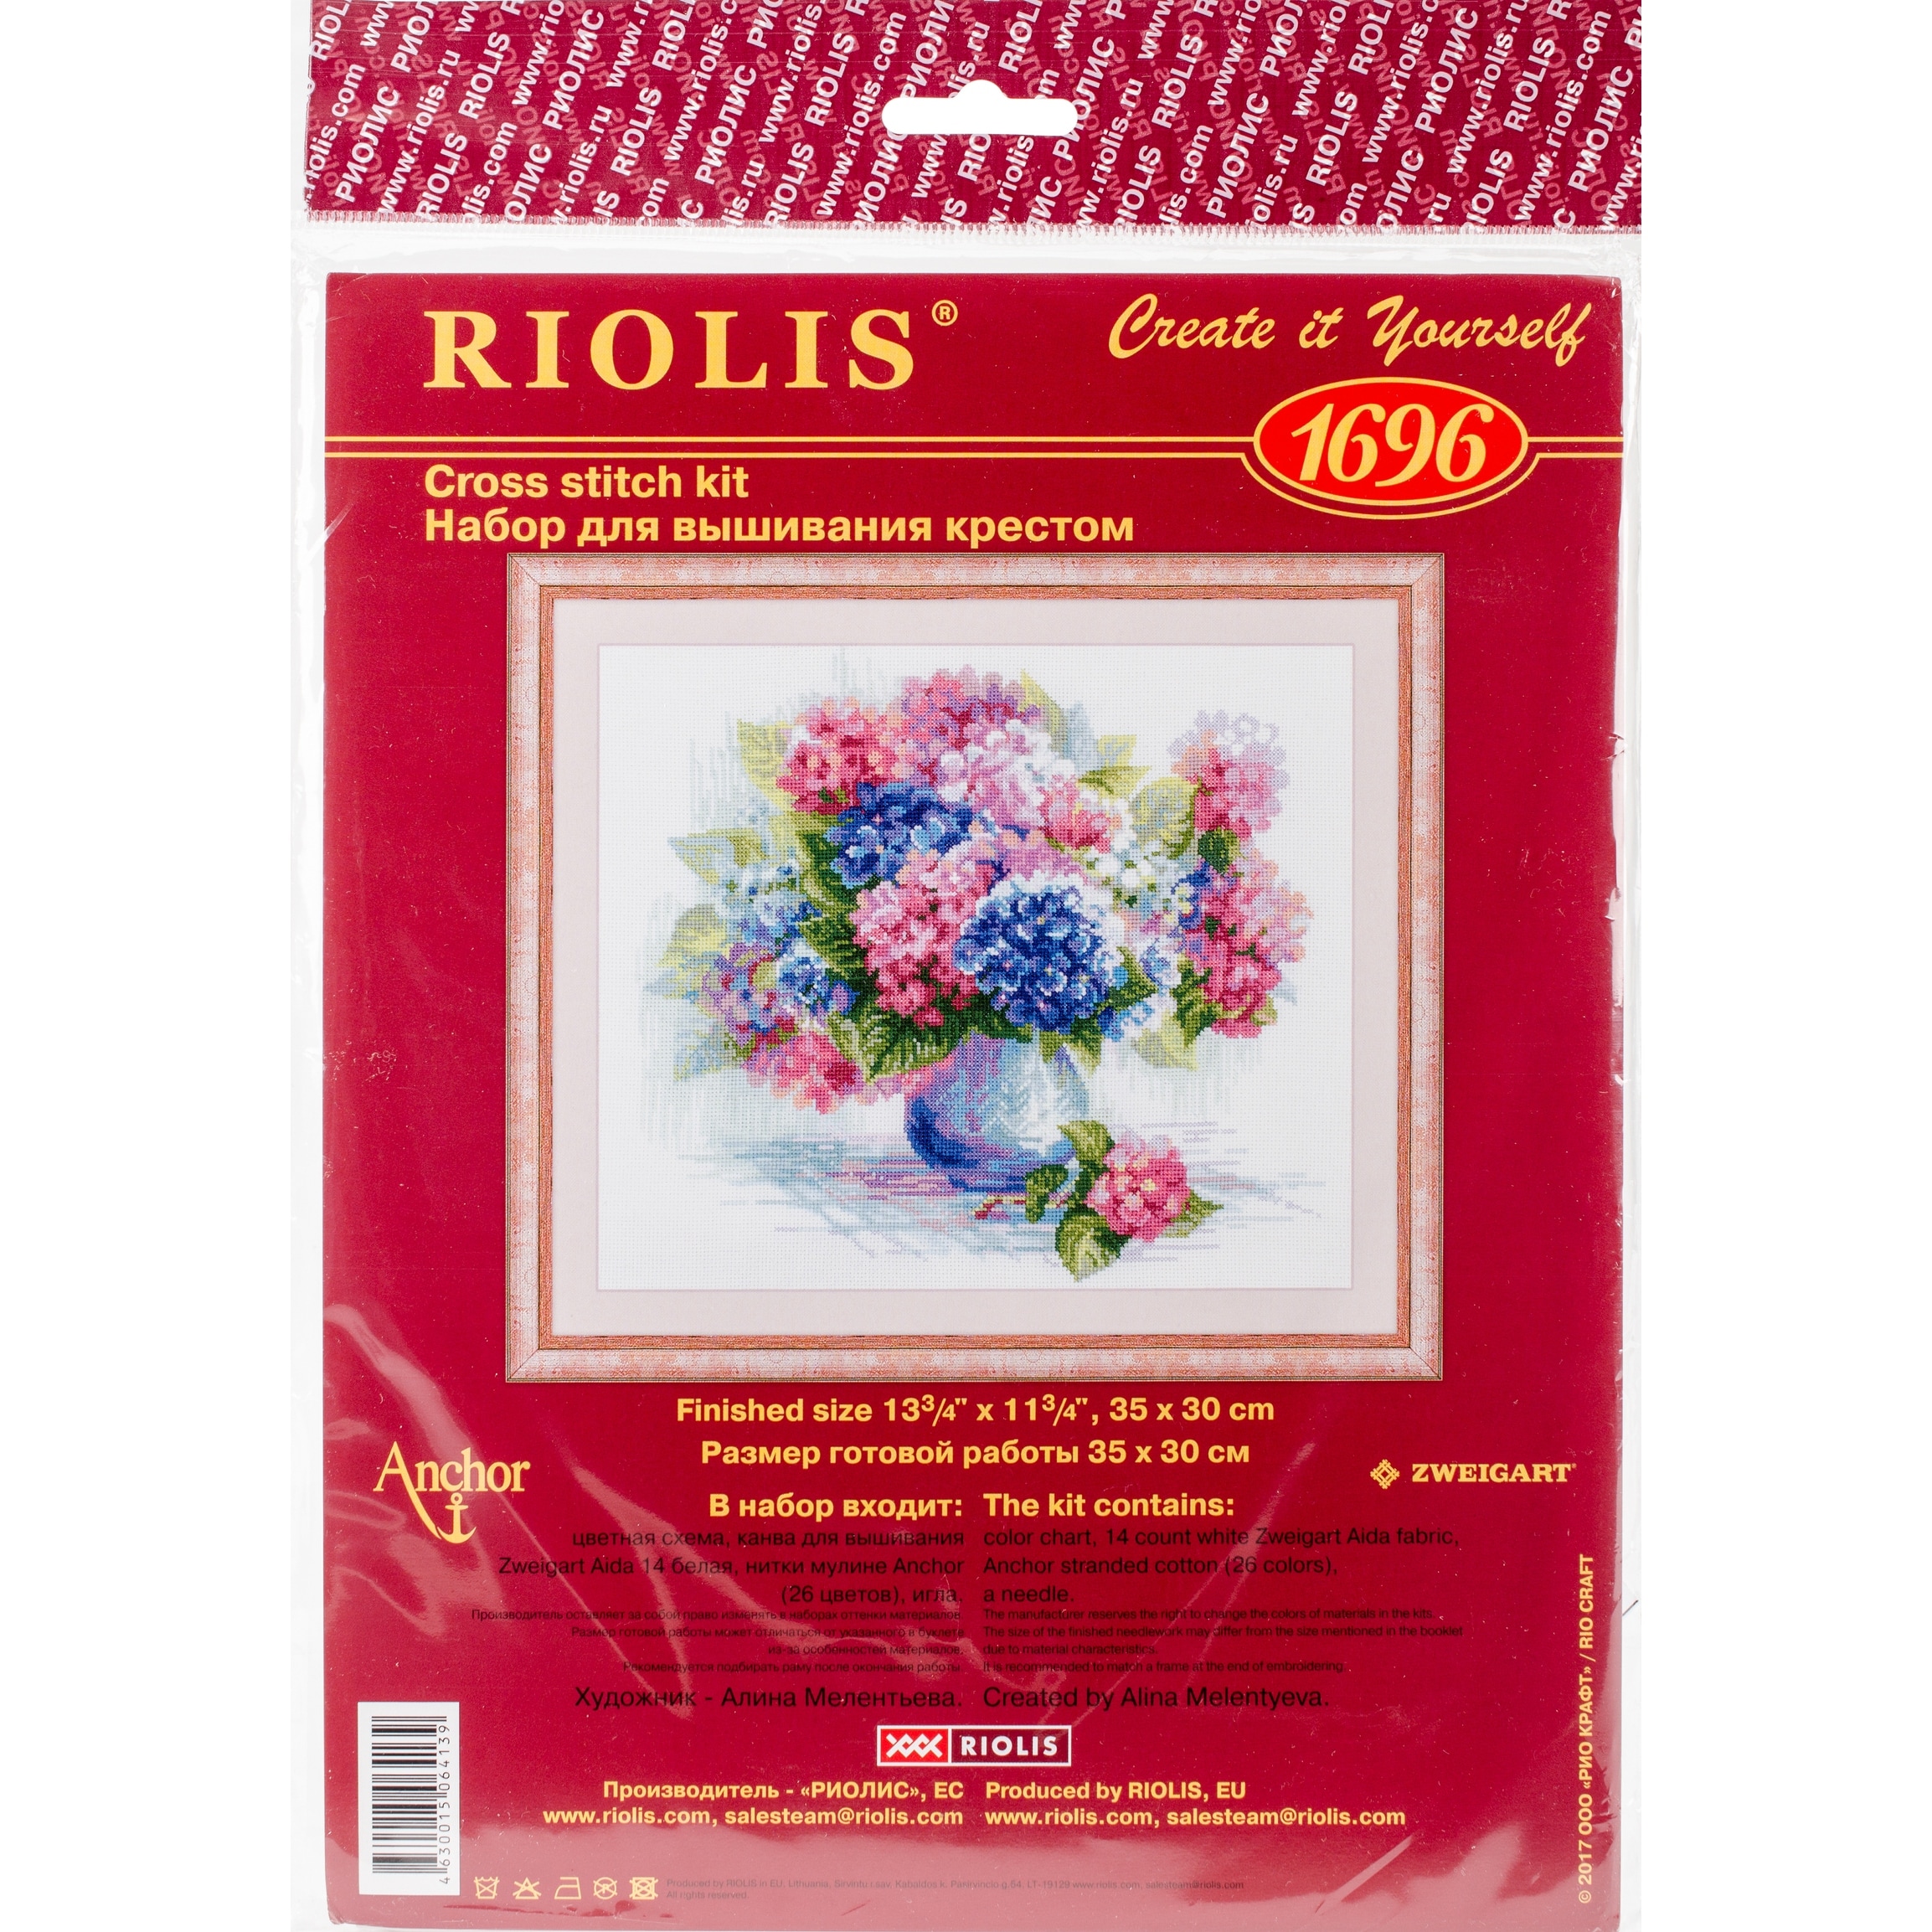 Riolis Cross Stitch Charts